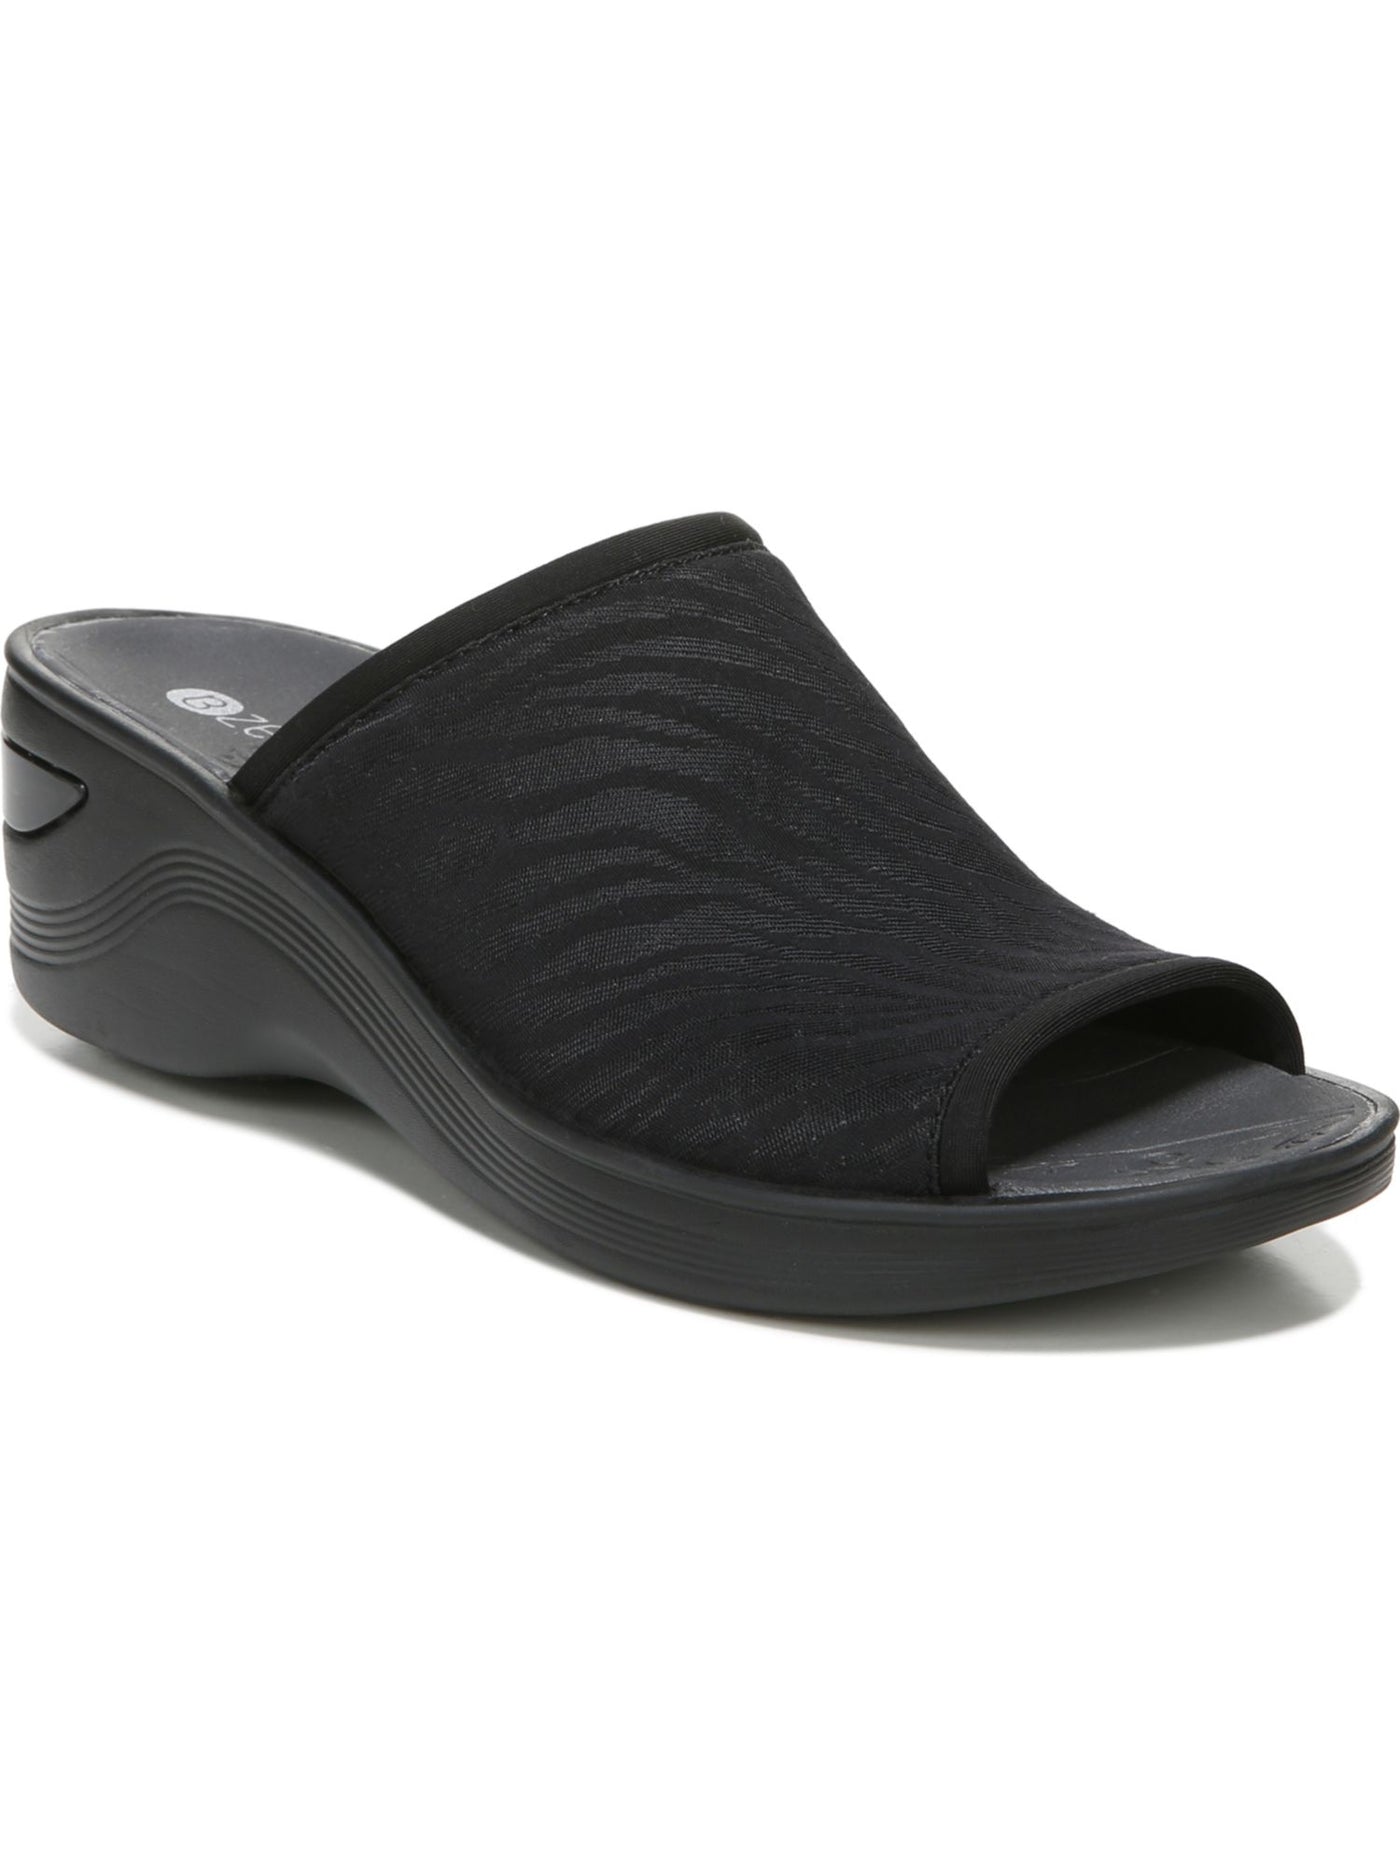 BZEES Womens Black Tonal Animal Print Cushioned Deluxe Peep Toe Wedge Slip On Sandals Shoes 6.5 M